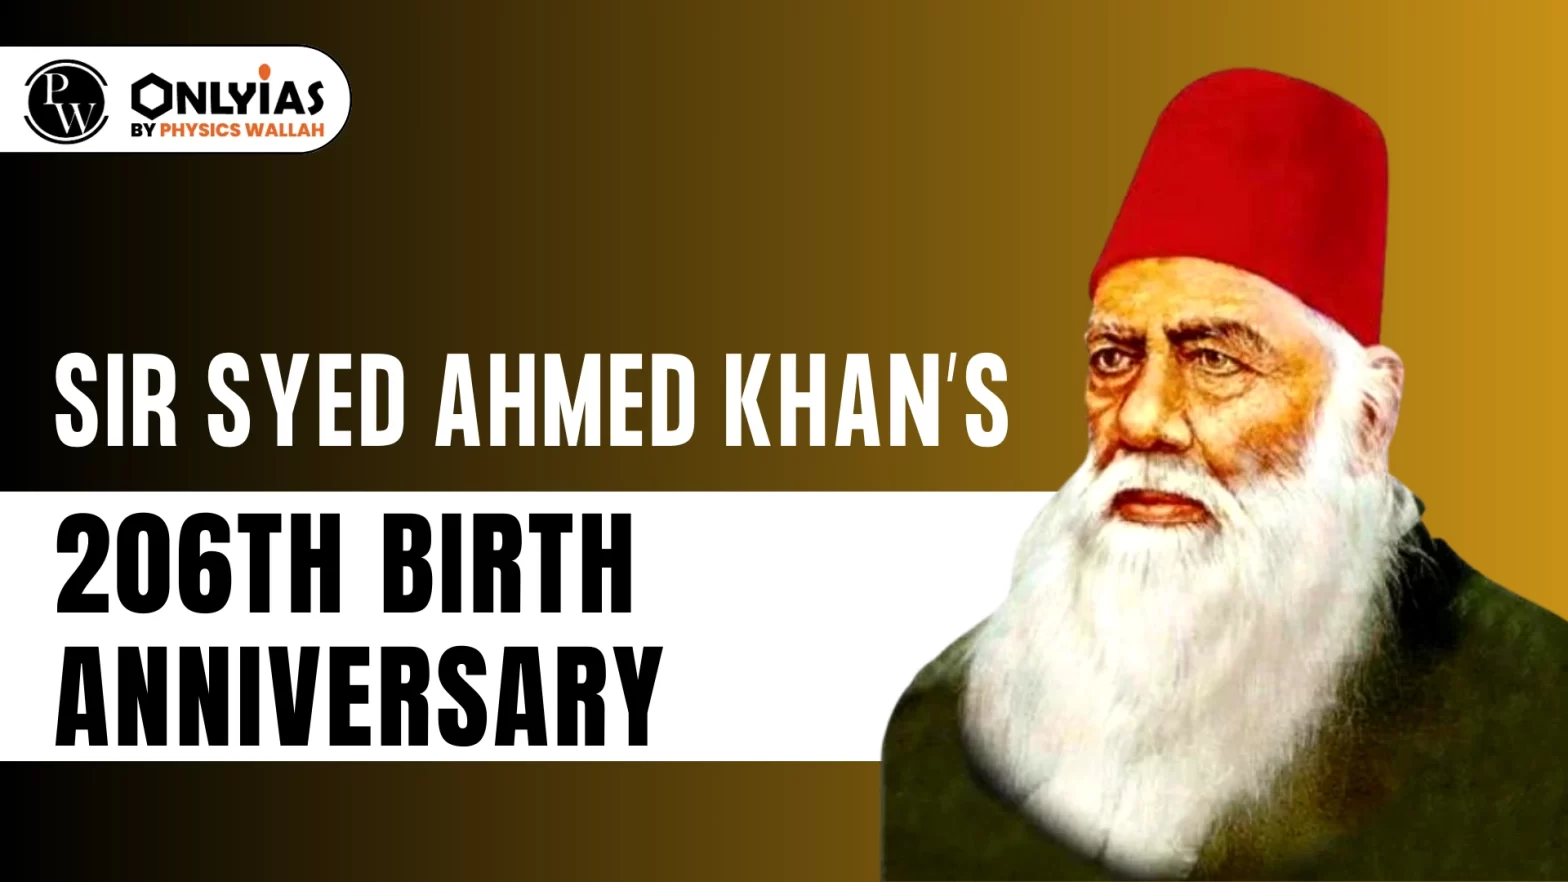 Sir Syed Ahmed Khan’s 206th Birth Anniversary